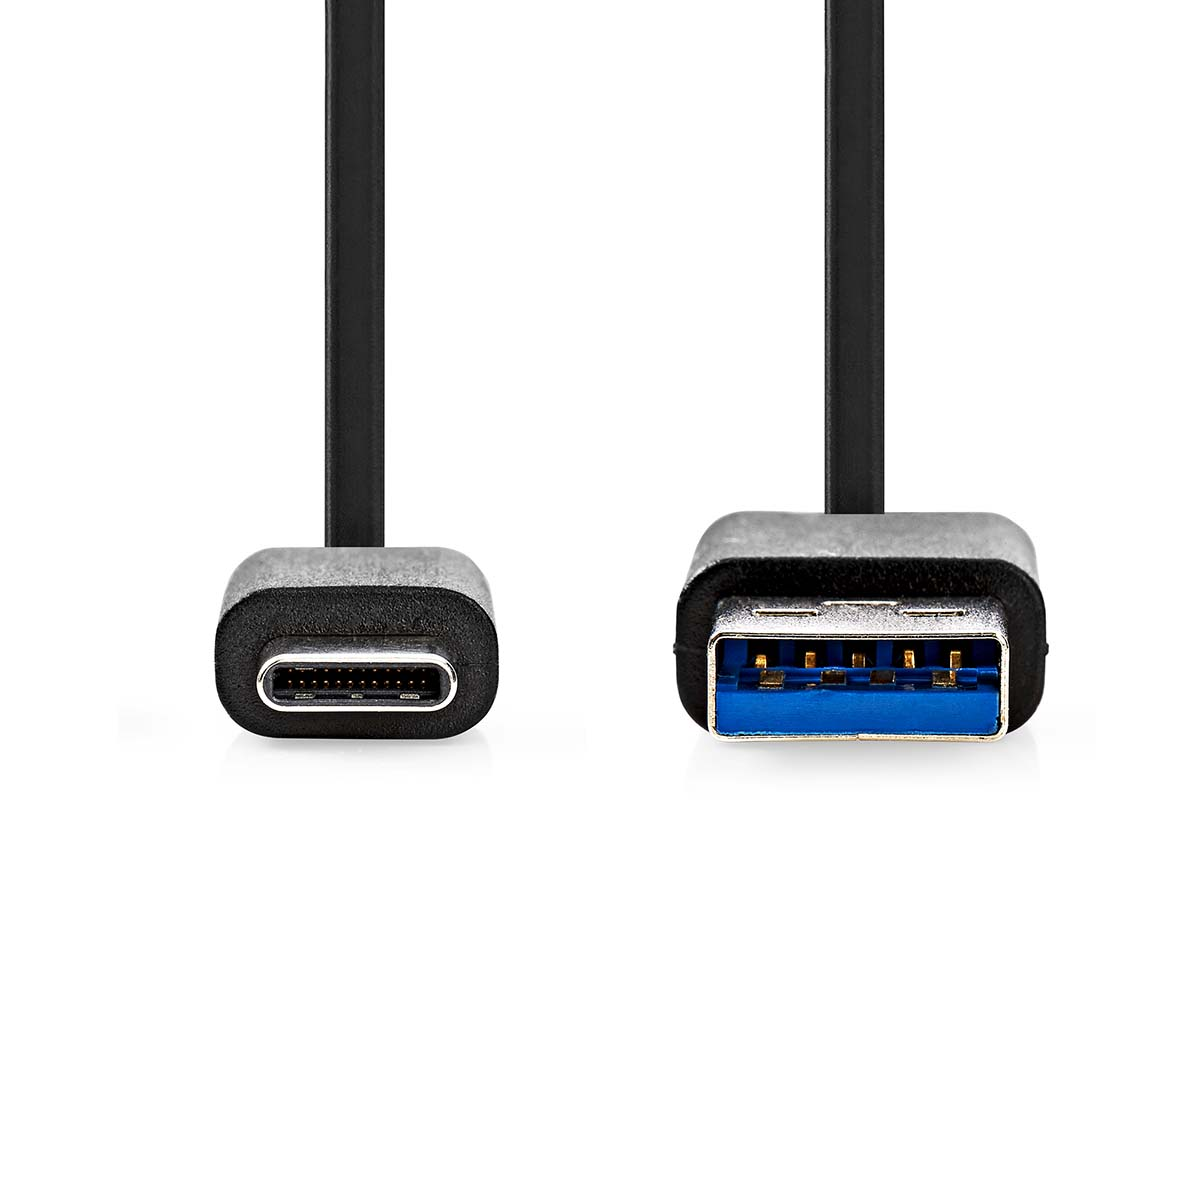 m USB-Kabel, 1,00 NEDIS CCGP61600BK10,